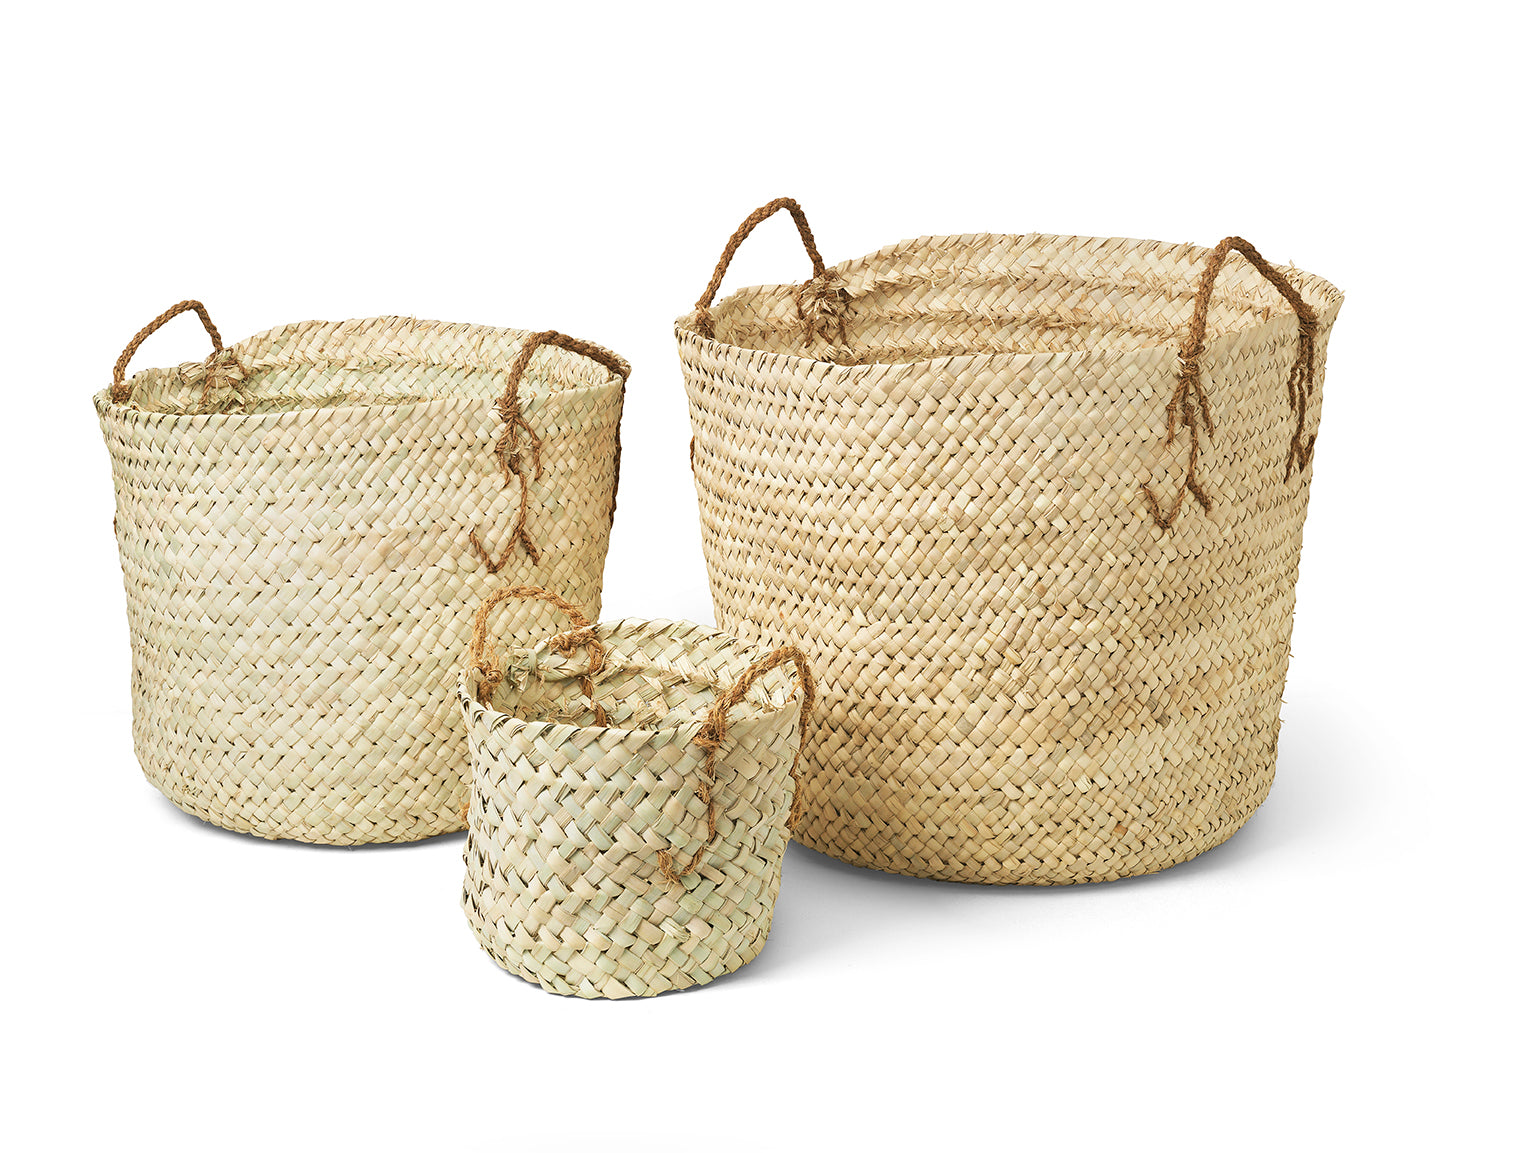 Palm basket